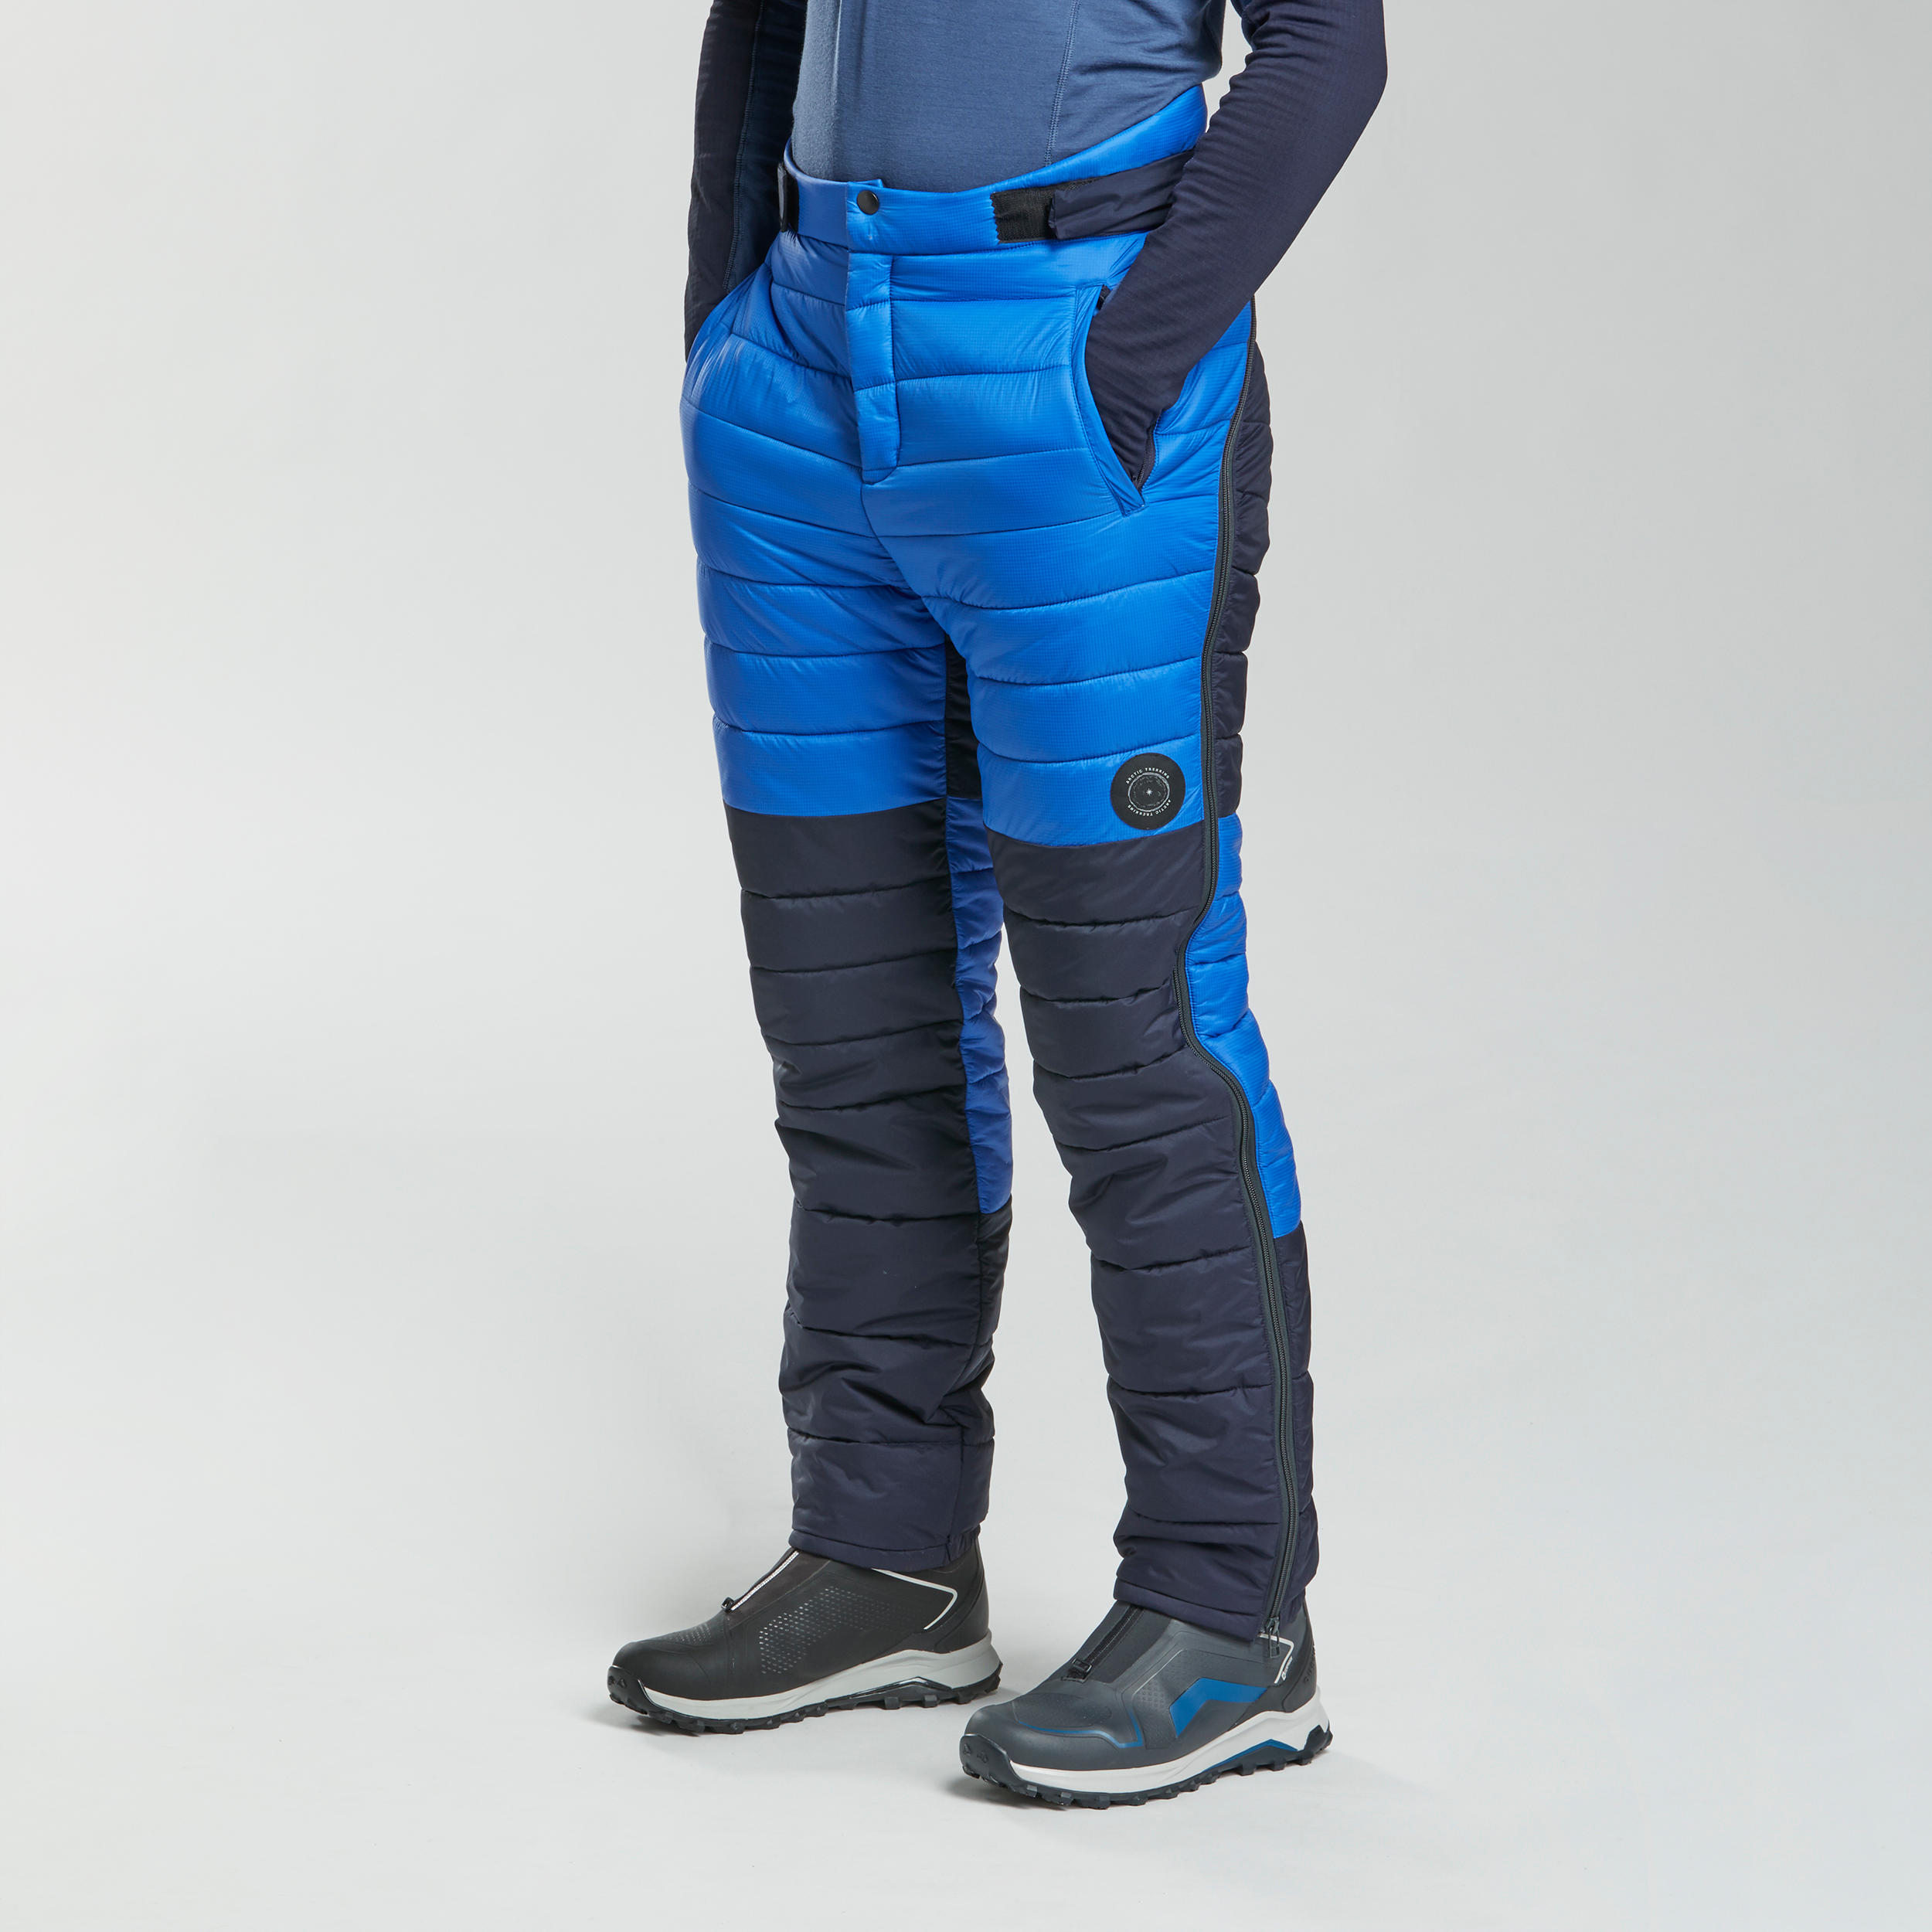 Decathlon official soft shell pants men's outdoor winter and spring rock  climbing warm windproof pants waterproof